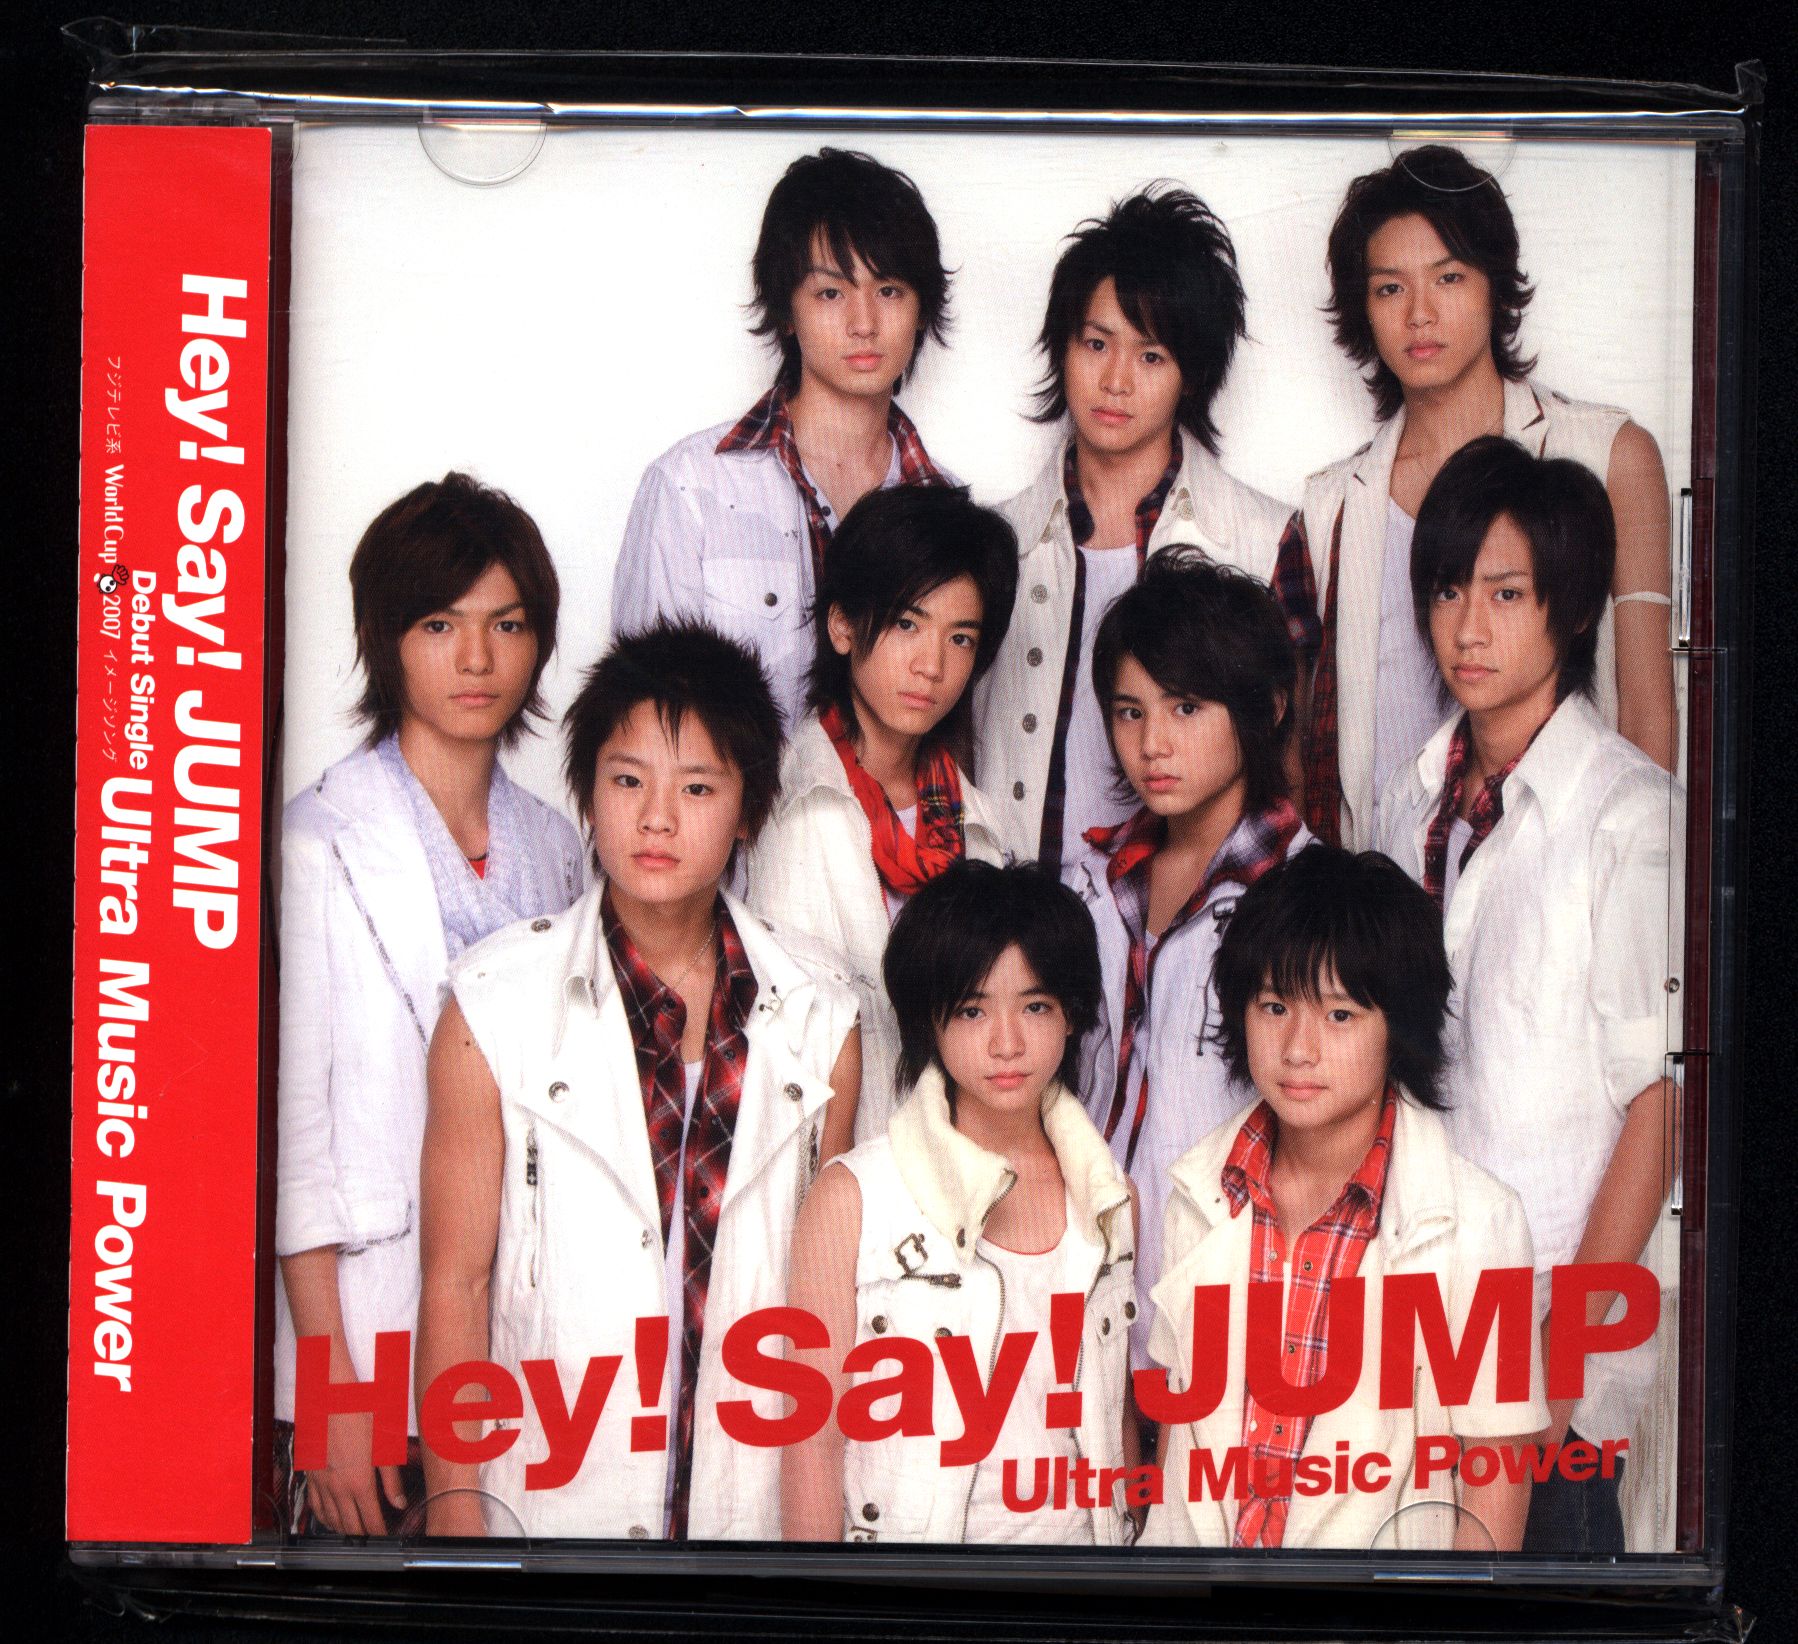 Hey! Say! JUMP Ultra Music Power 初回限定盤 CD+DVD 帯付き - 人 